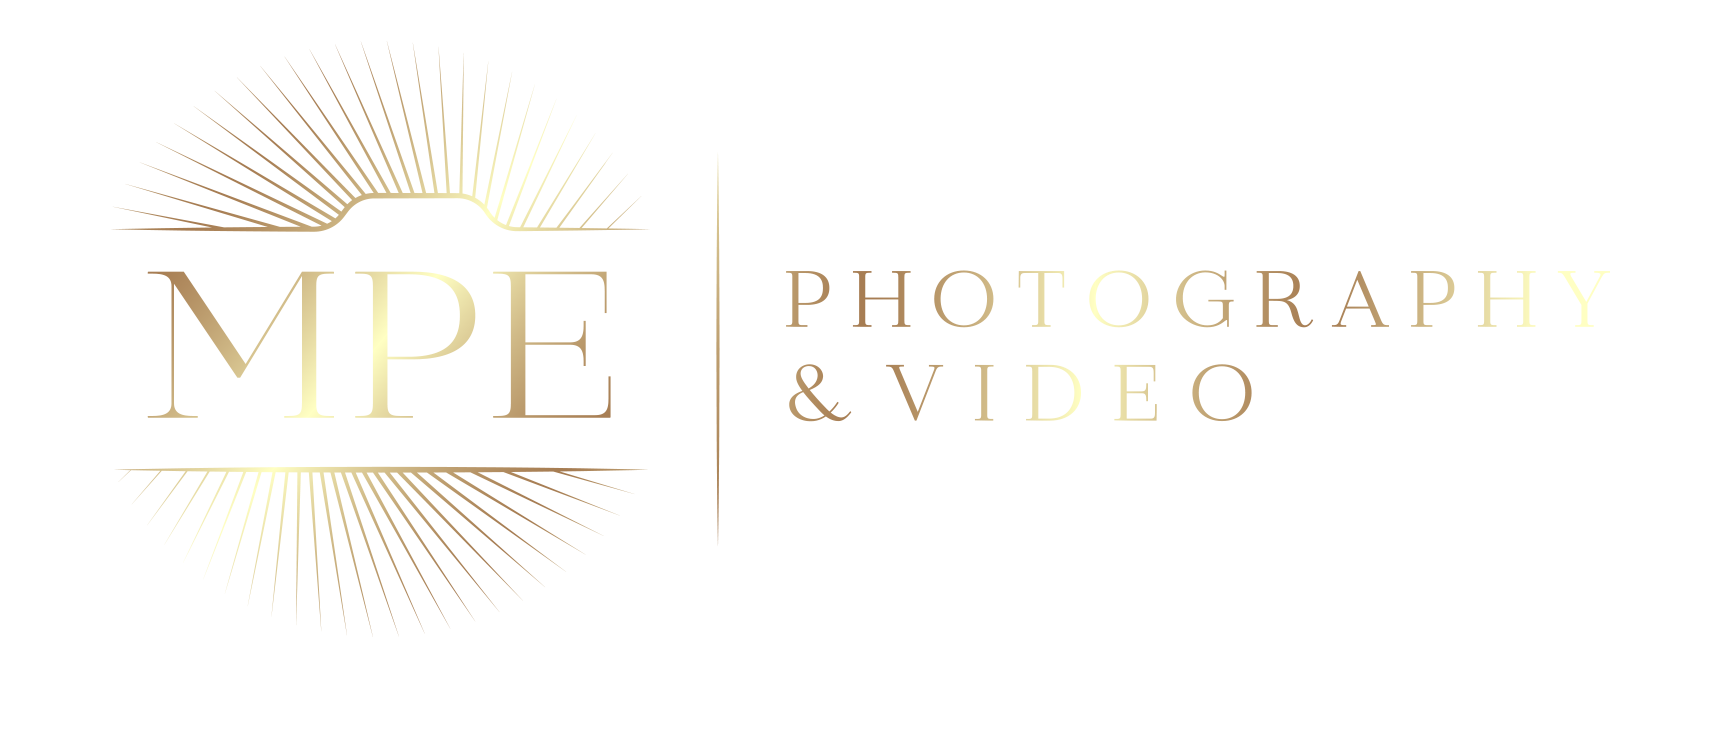 MPE Photography & Ridge Gallery